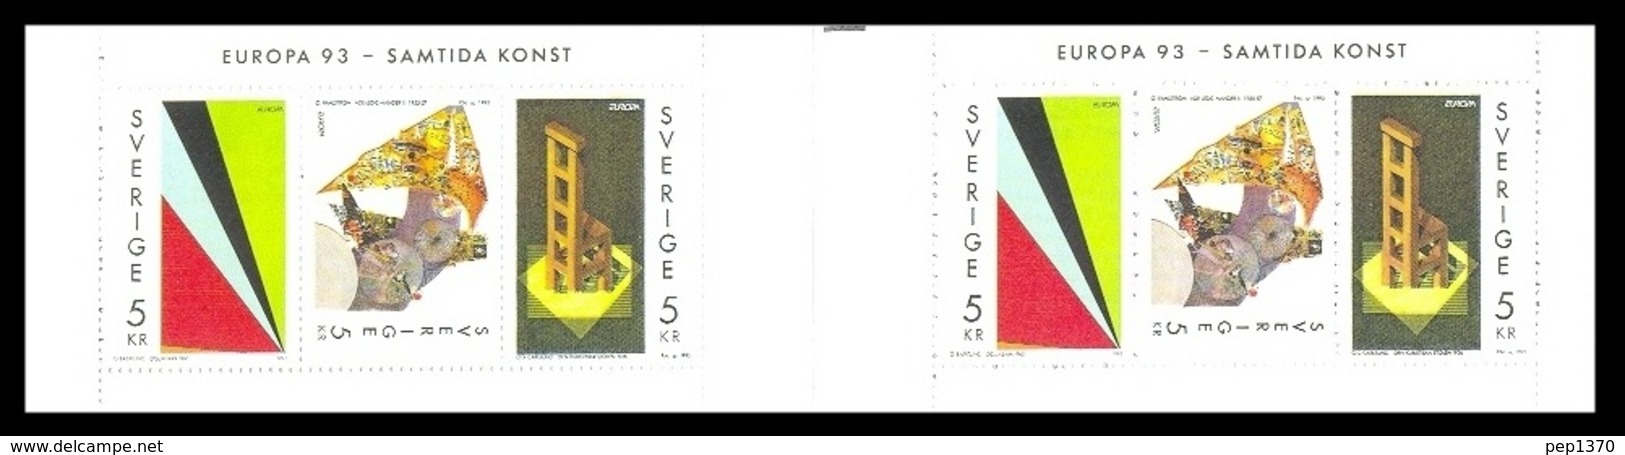 SUECIA 1993 EUROPA CEPT - ARTE MODERNO - CARNET - YVERT 1756-1758 CR1756 - Unused Stamps